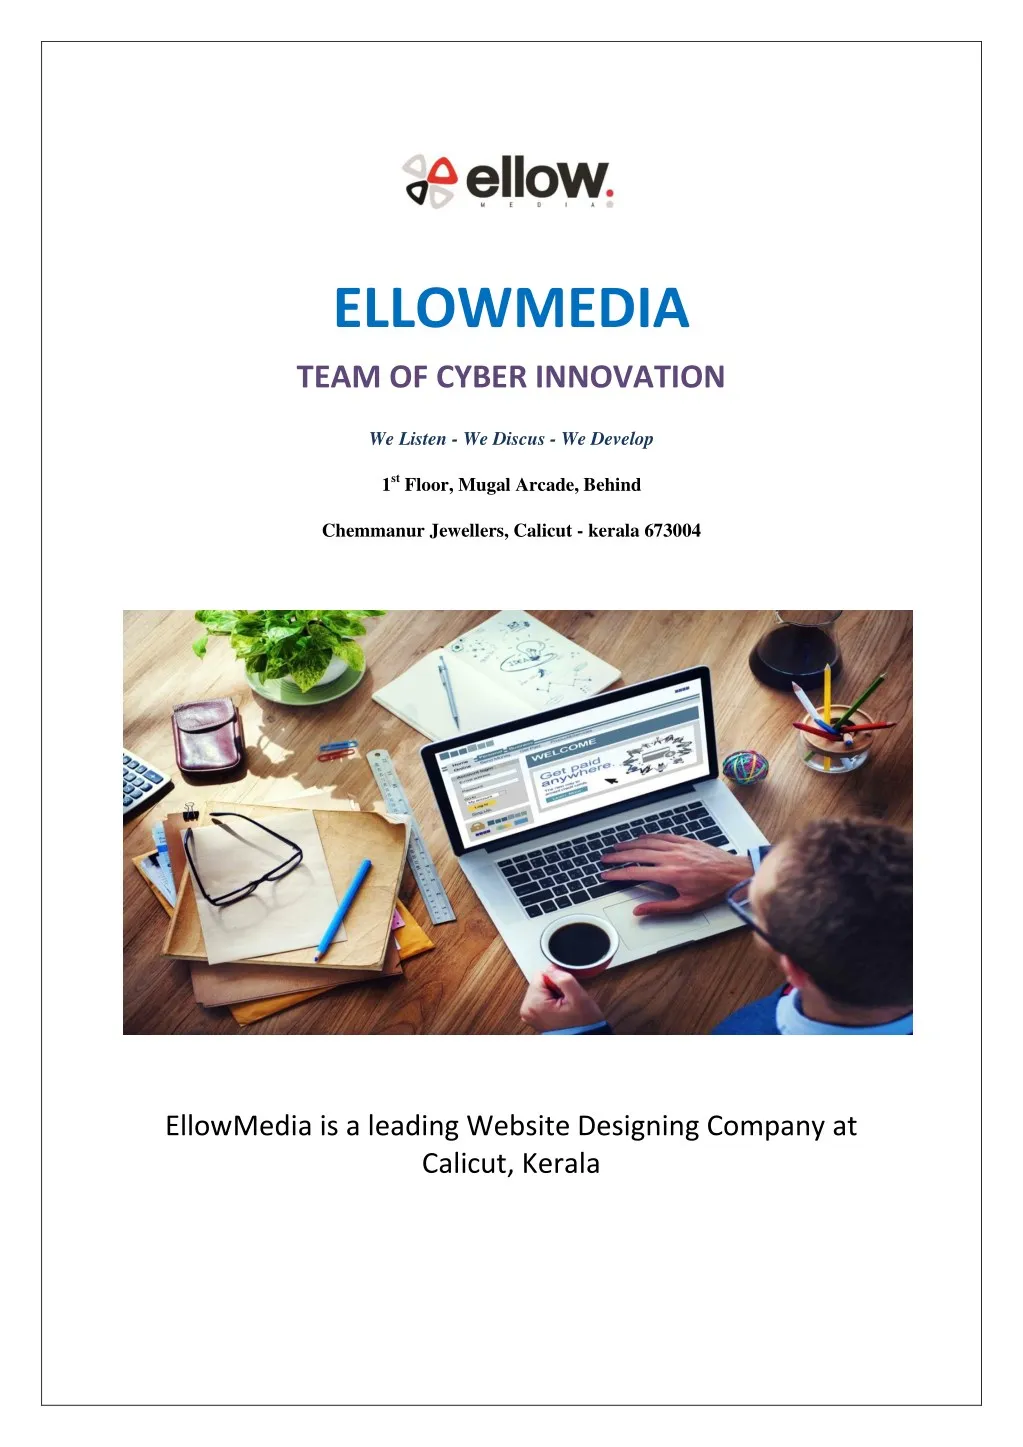 ellowmedia team of cyber innovation